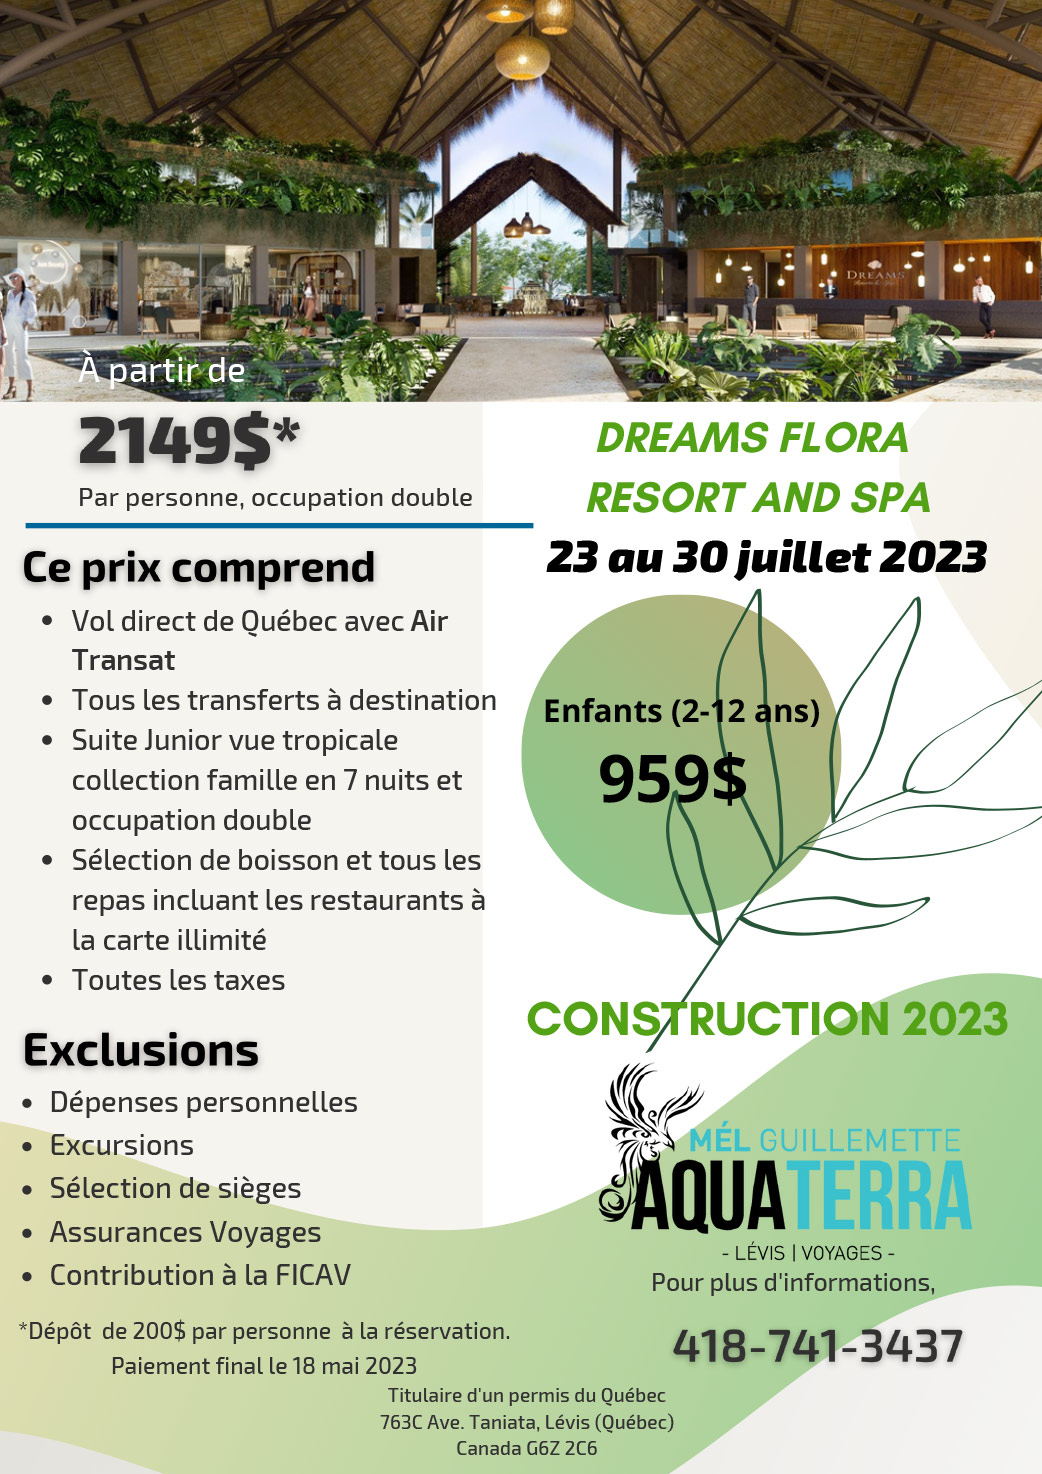 Voyages au Dreams Flora Resort and Spa 23 au 30 juillet 2023